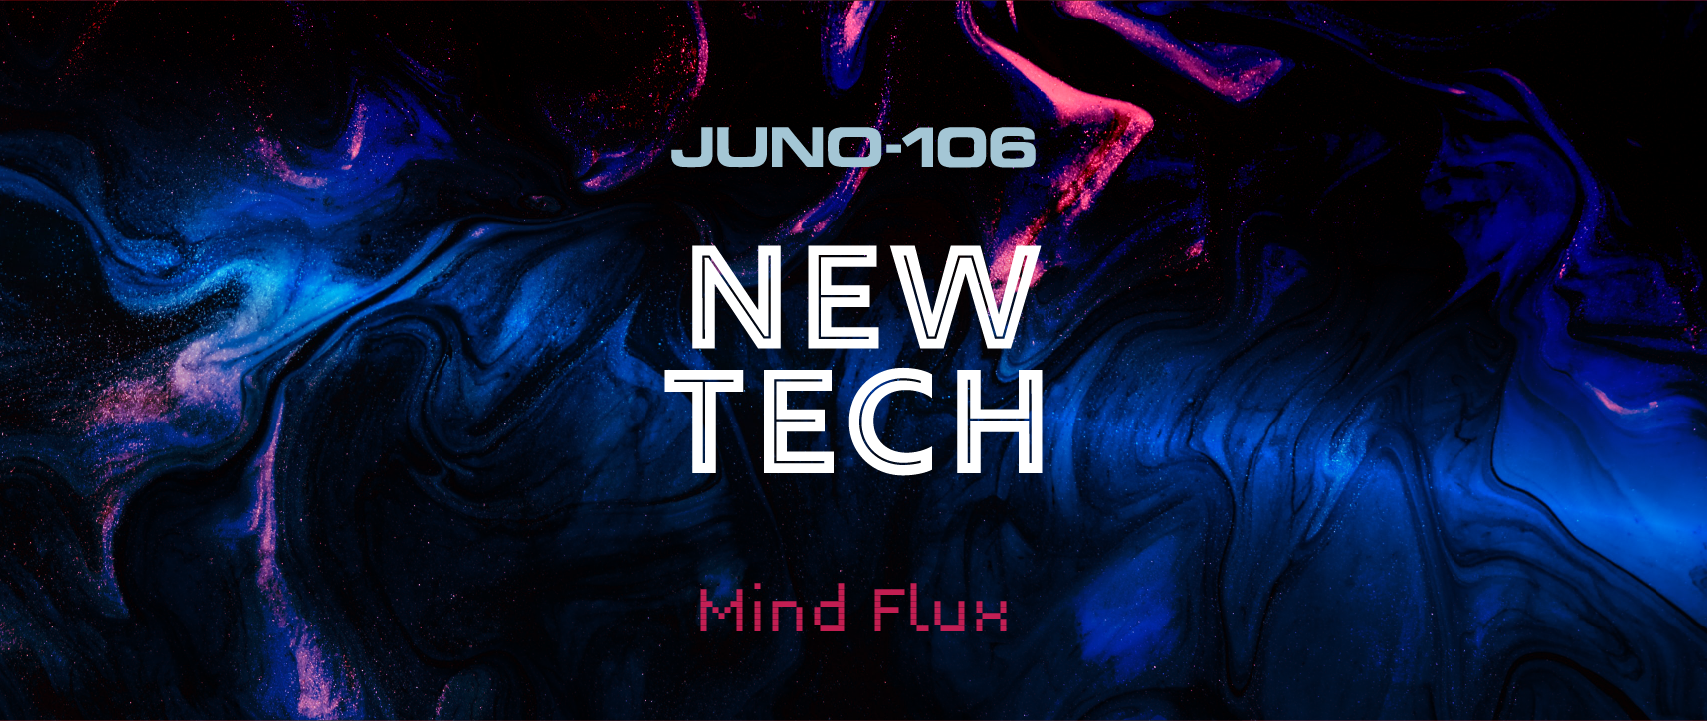 Download Juno 106 Vst Torrent